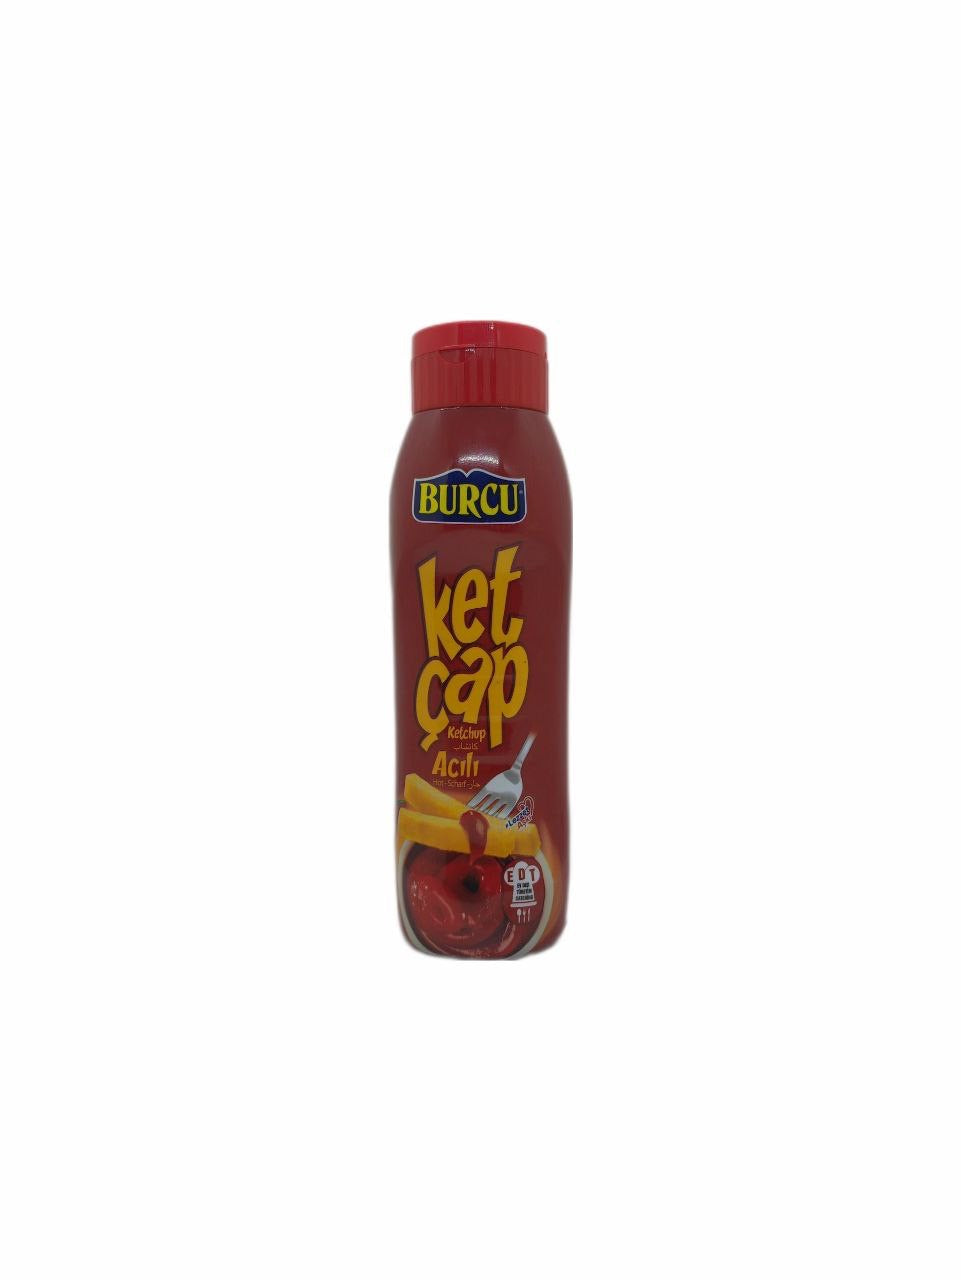 Burcu Ketchup scharf 500g